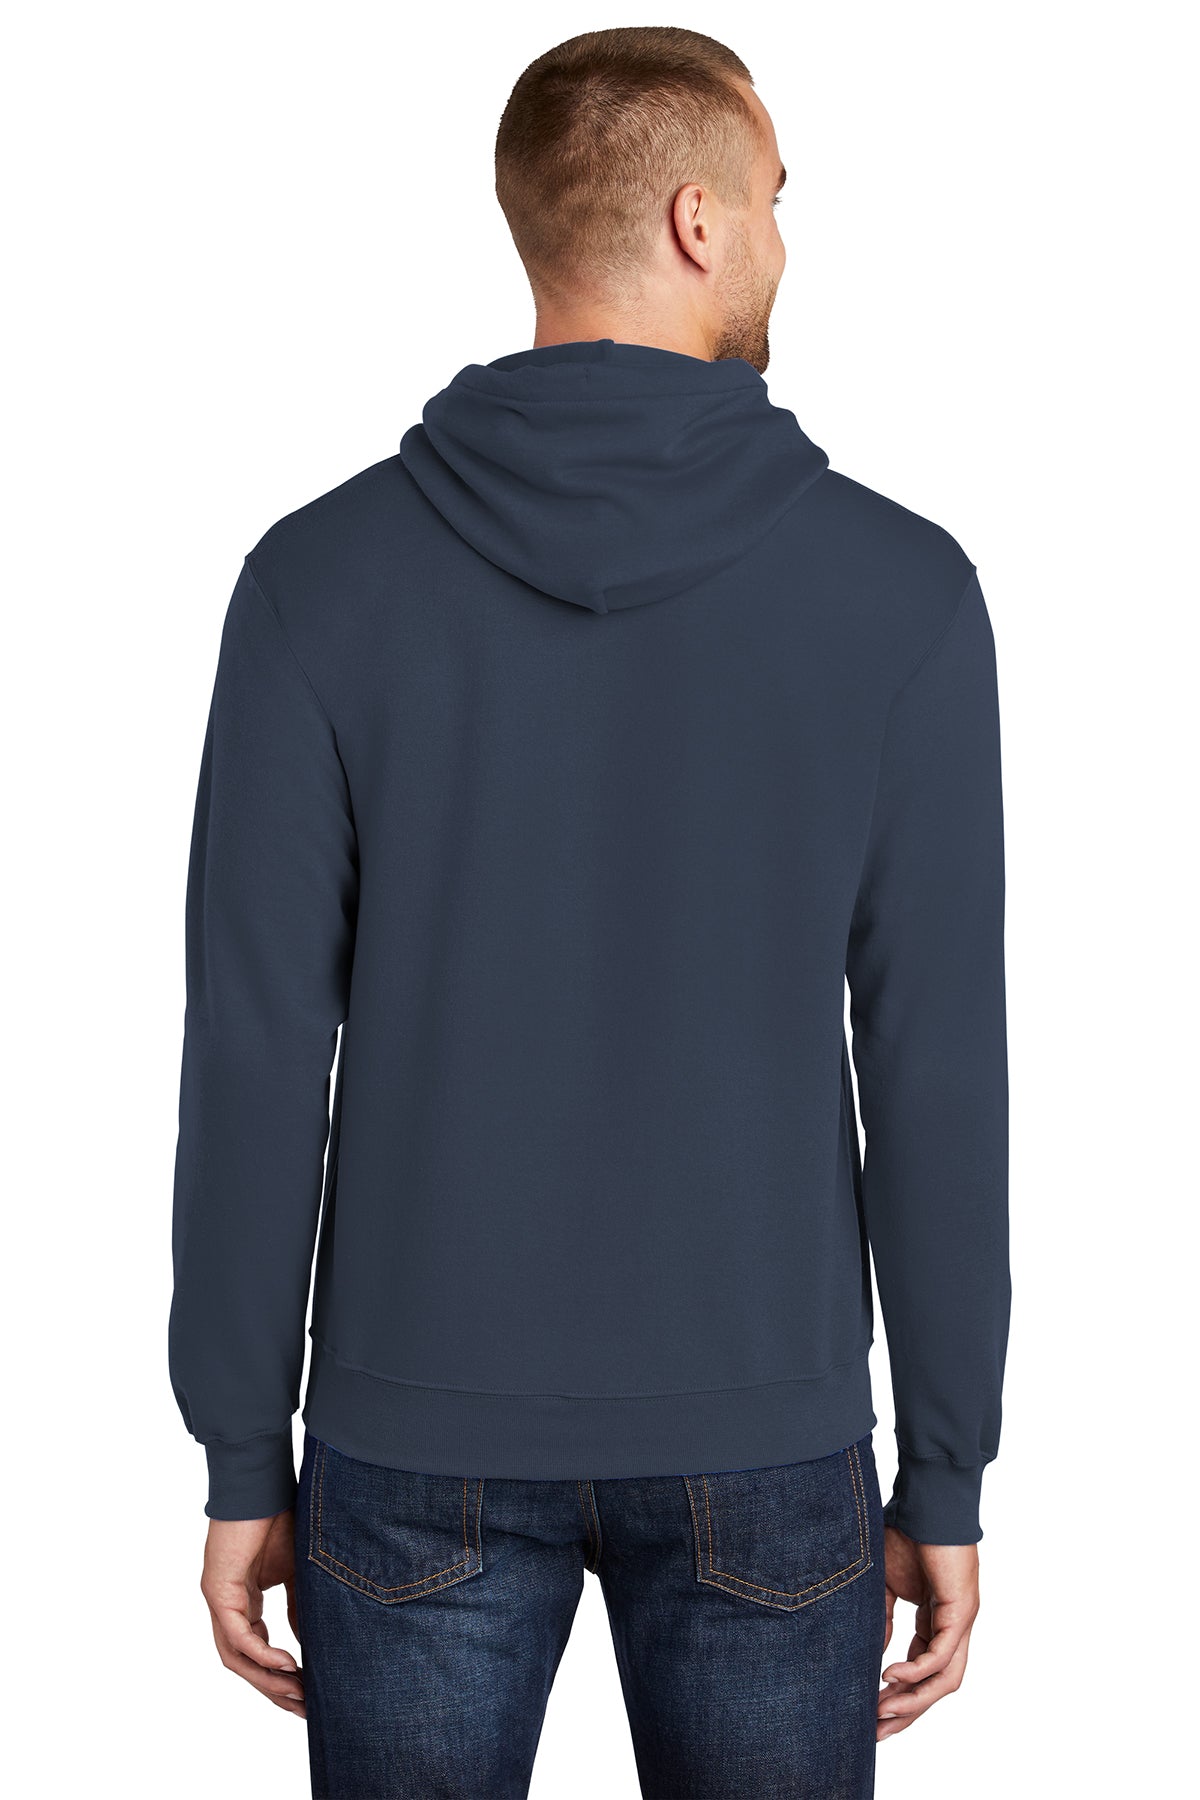 Port & Company PC78H Mens Core Fleece Hooded Sweatshirt Hoodie Navy Blue Back